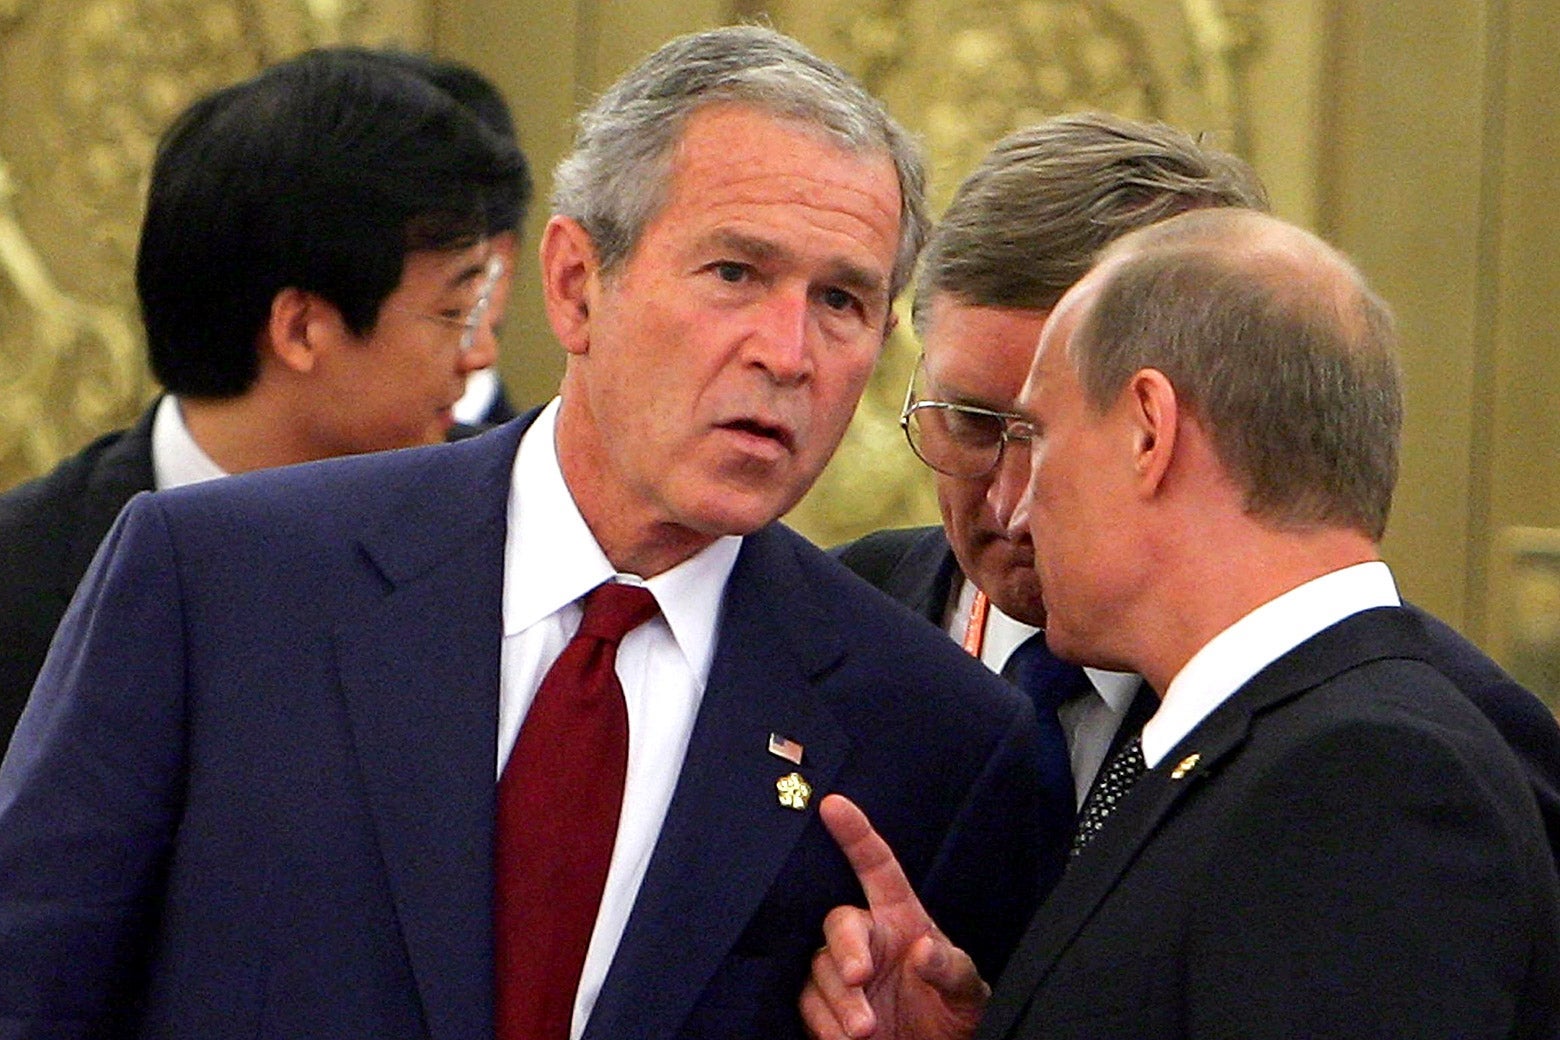 George W. Bush leans in to hear Vladimir Putin